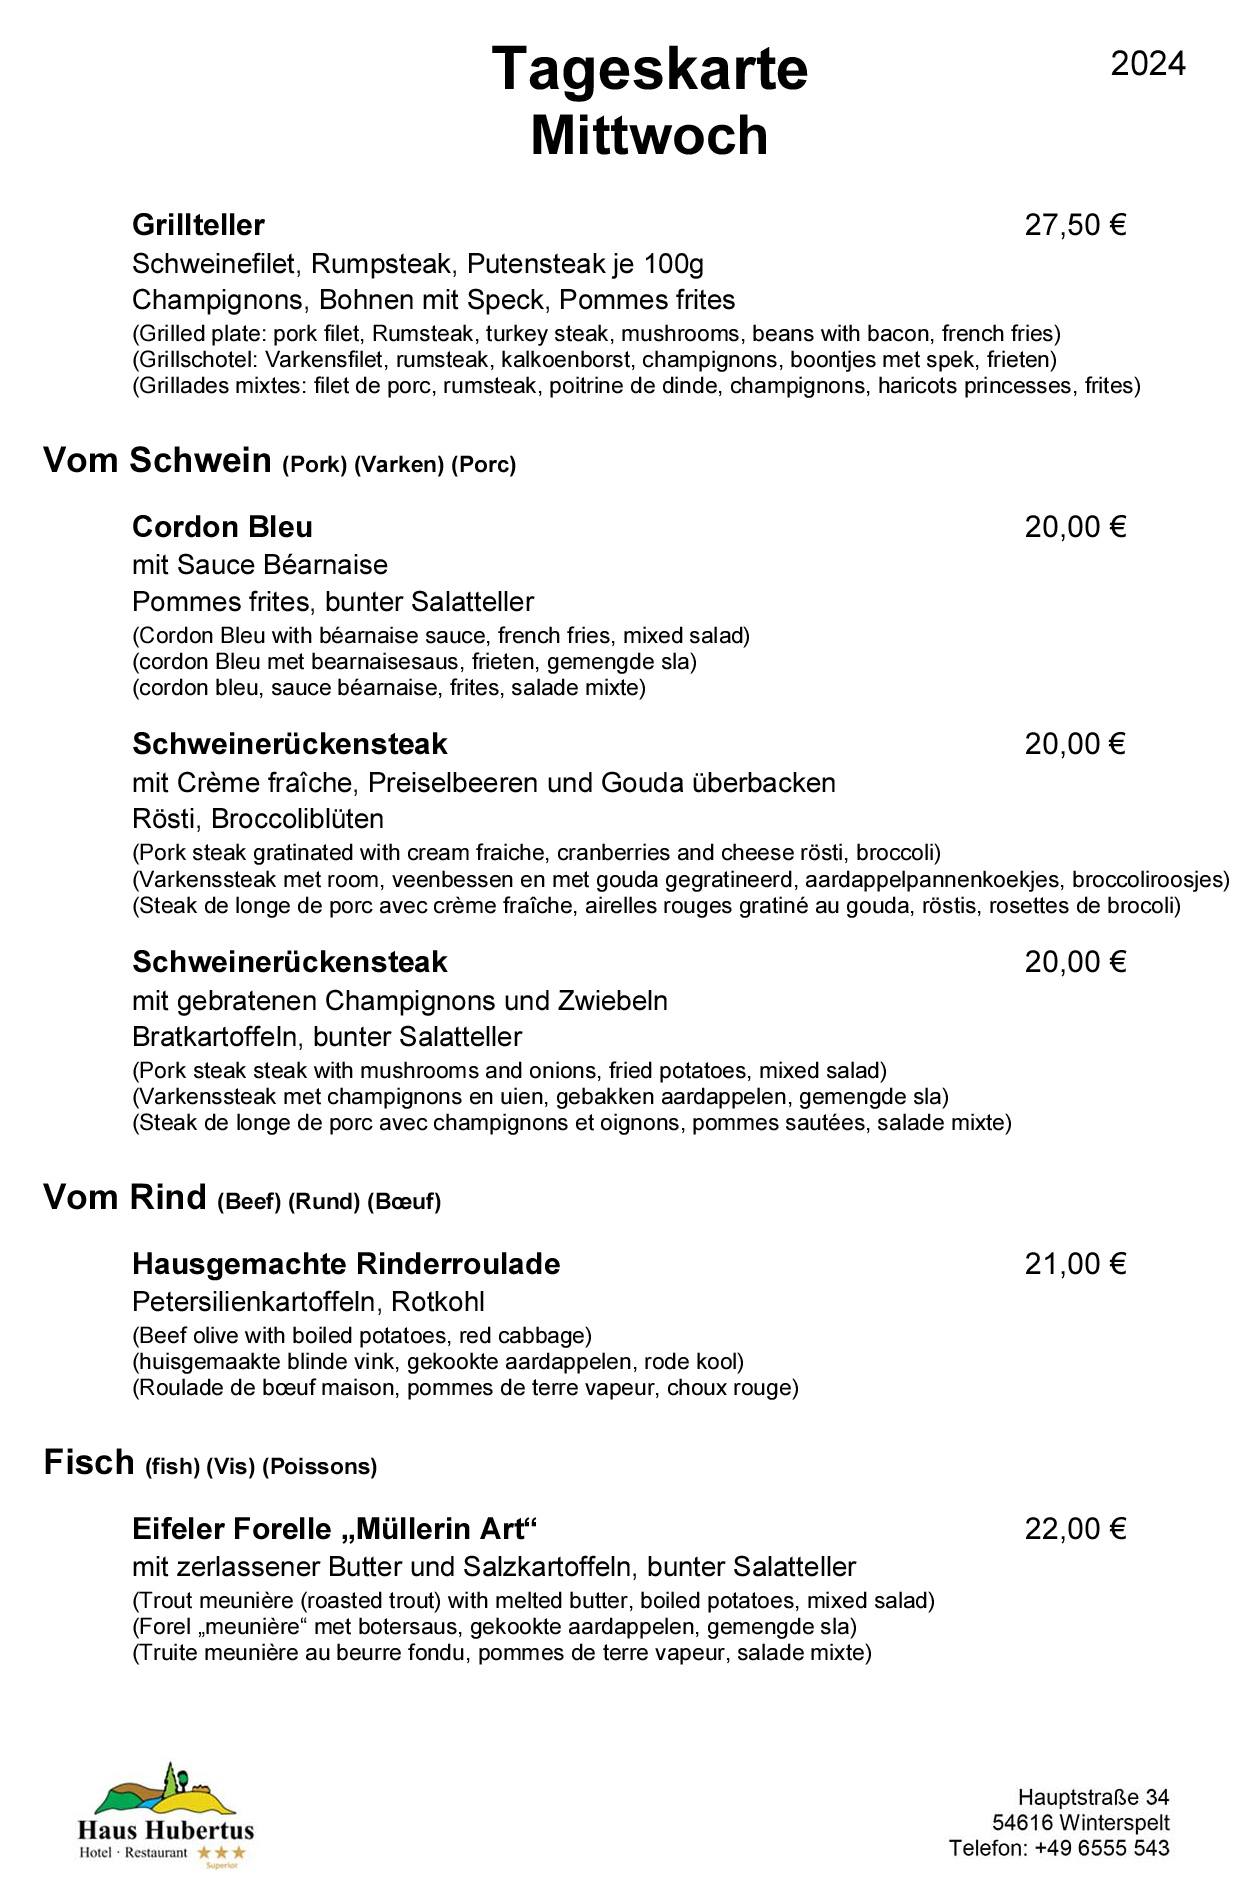 Hotel - Restaurant Haus Hubertus - Speisekarte 01/2024 - Tageskarte / Mittwoch